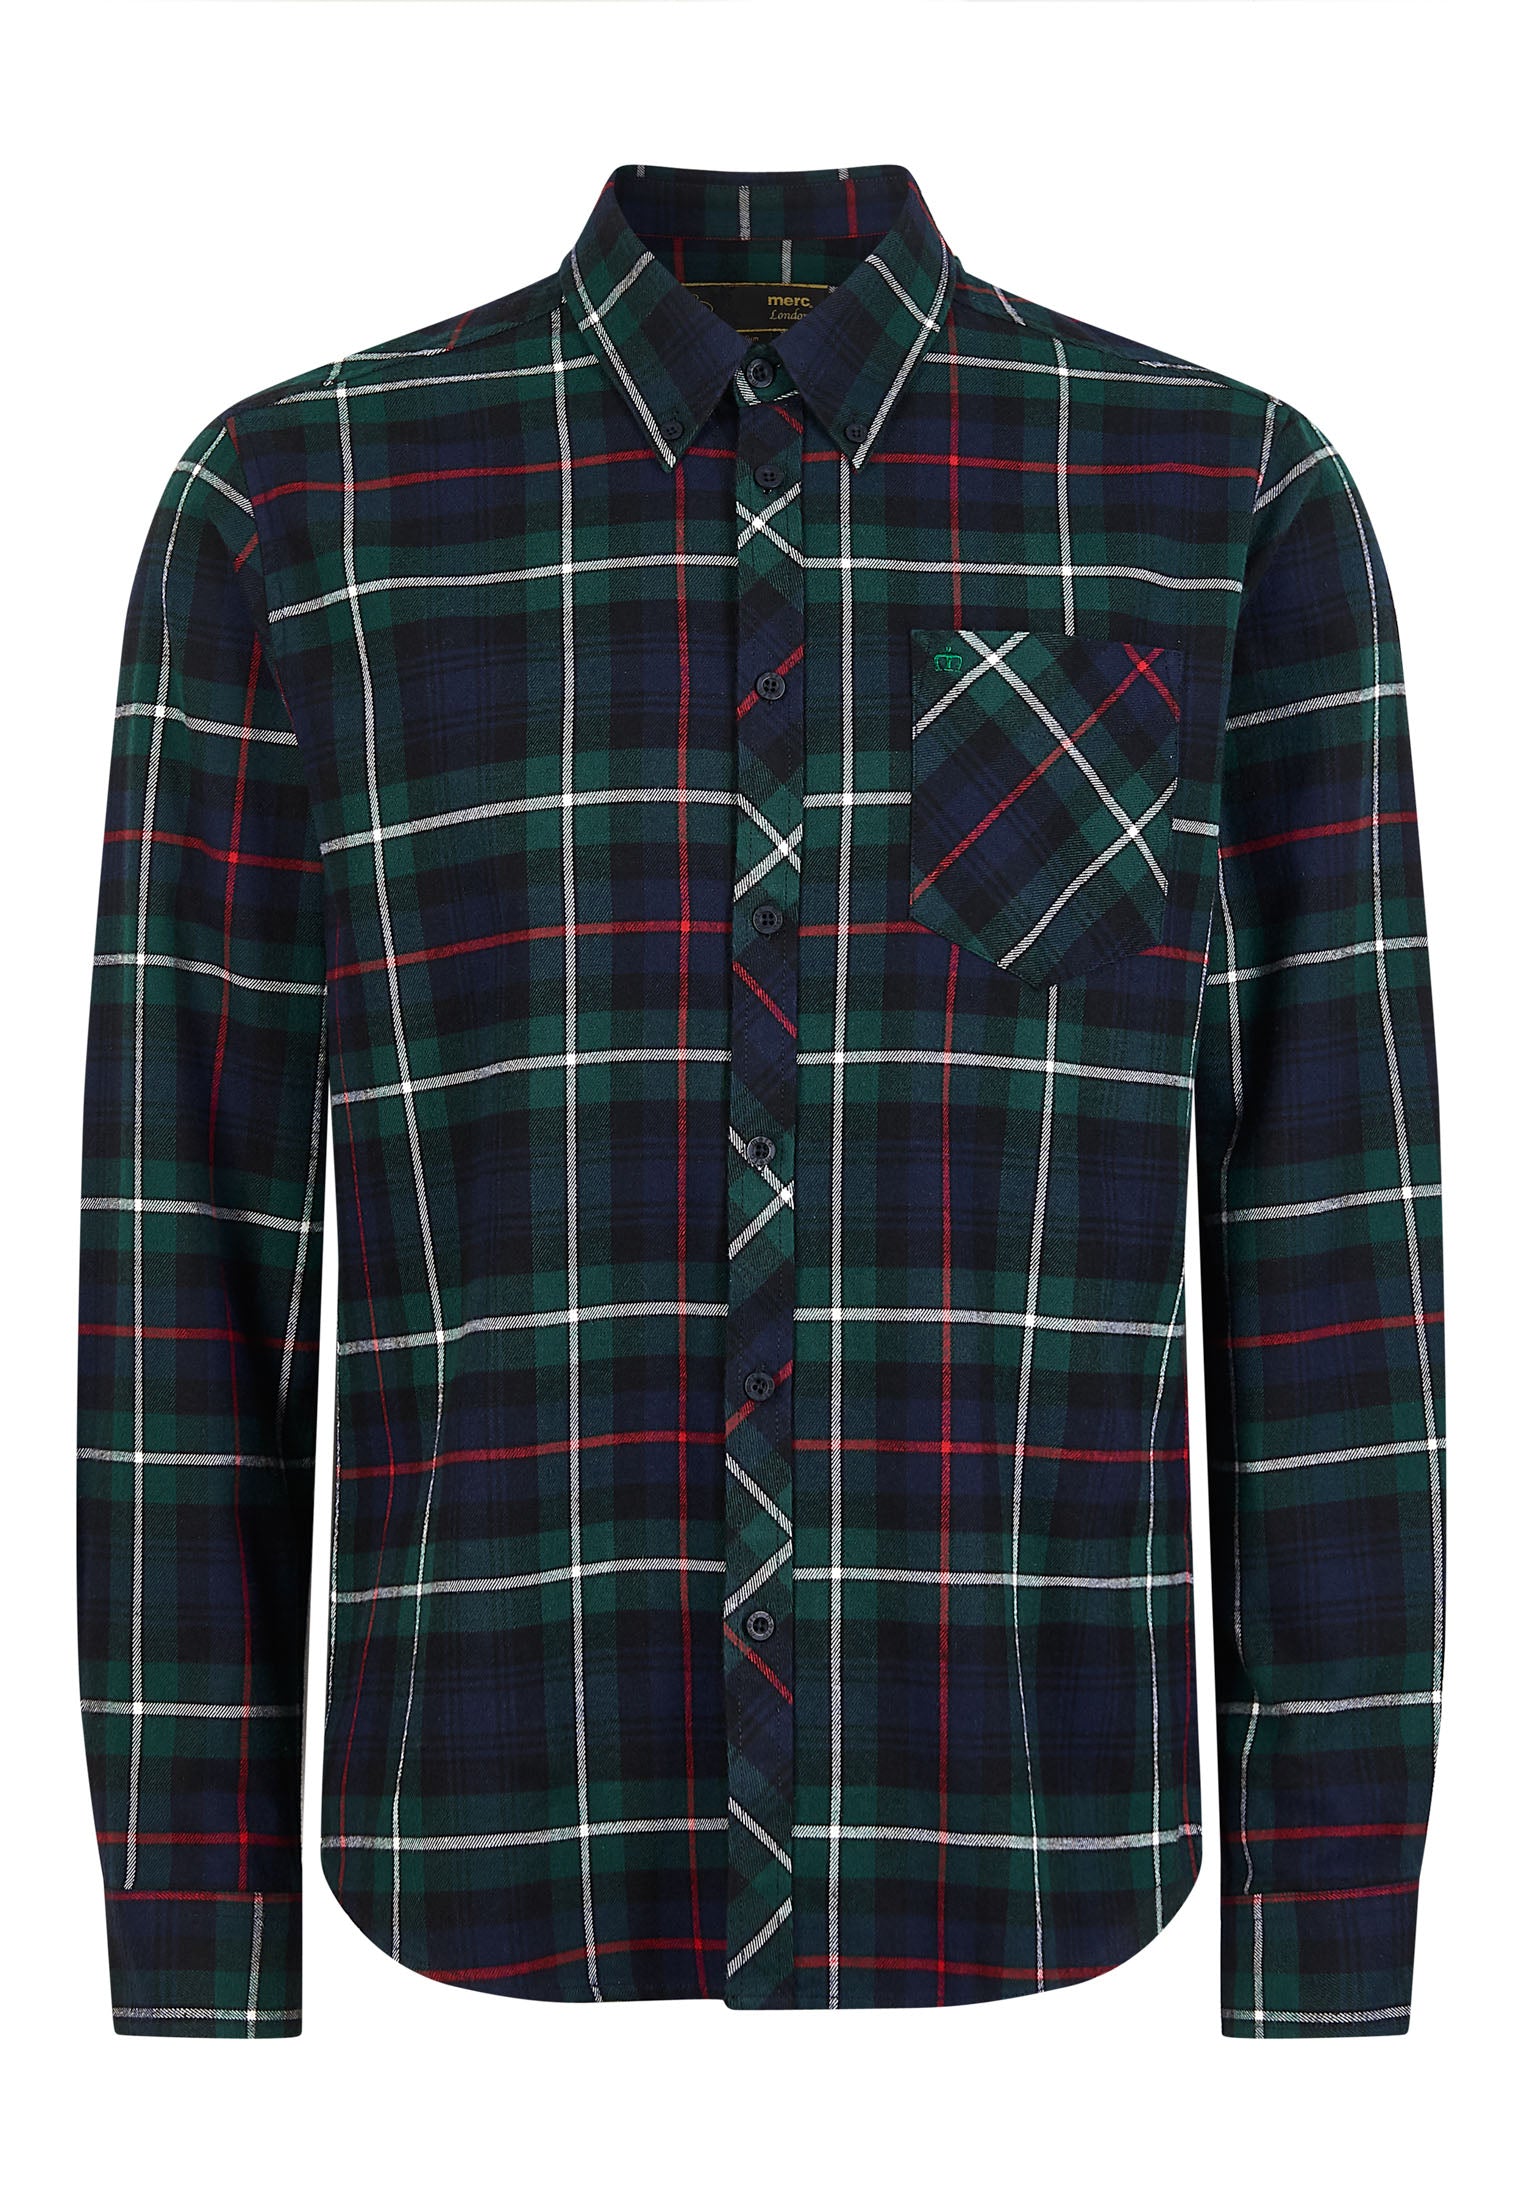 Brodick Brushed Twill Checked Tartan Shirt - Merc London - Front